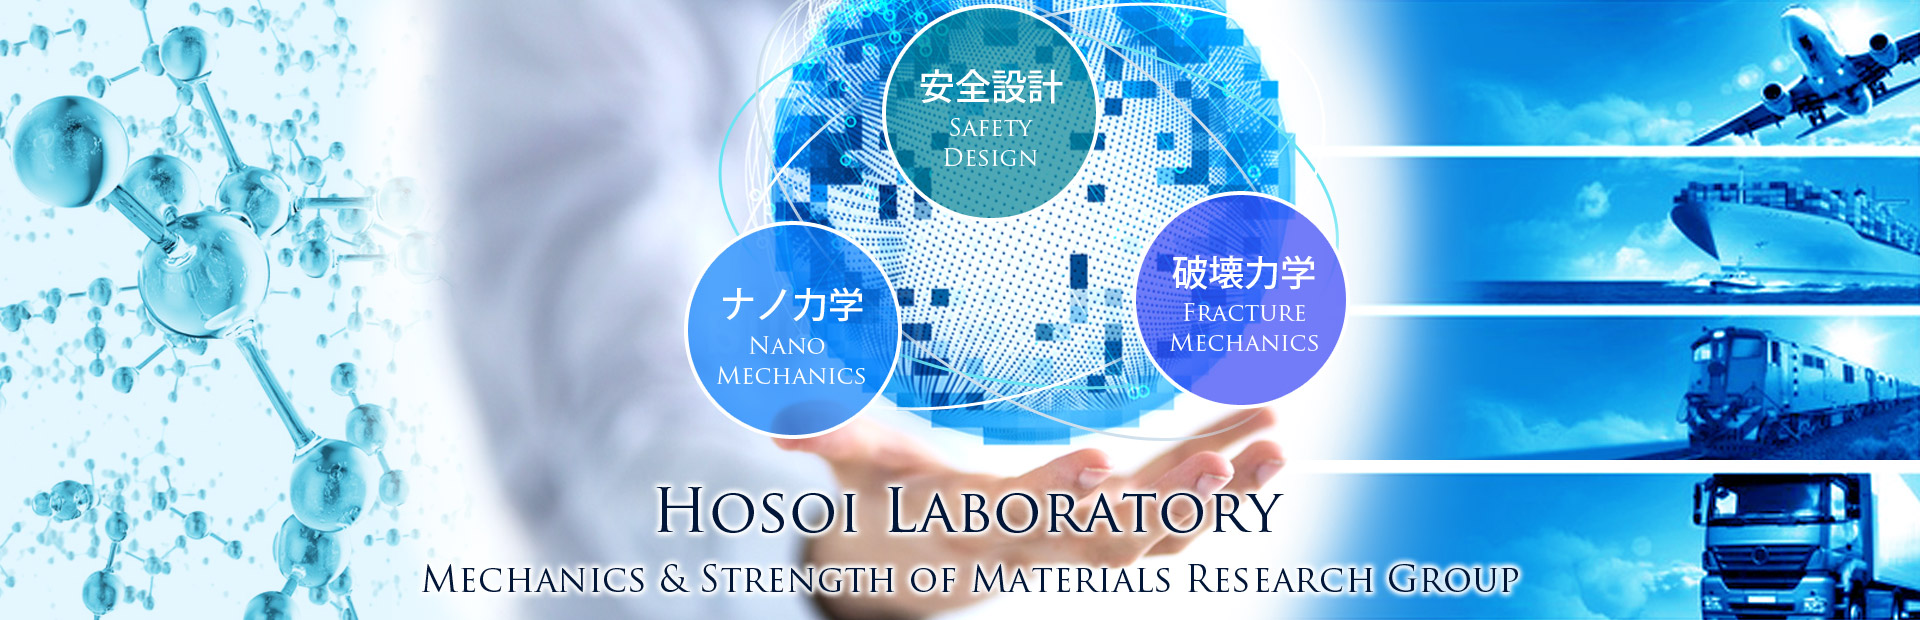 Hosoi Laboratory, Mechanics & Strength of Materials Research Group, 破壊力学 Fracture Mechanics, 安全設計 Safety Design, ナノ力学 Nano Mechanics